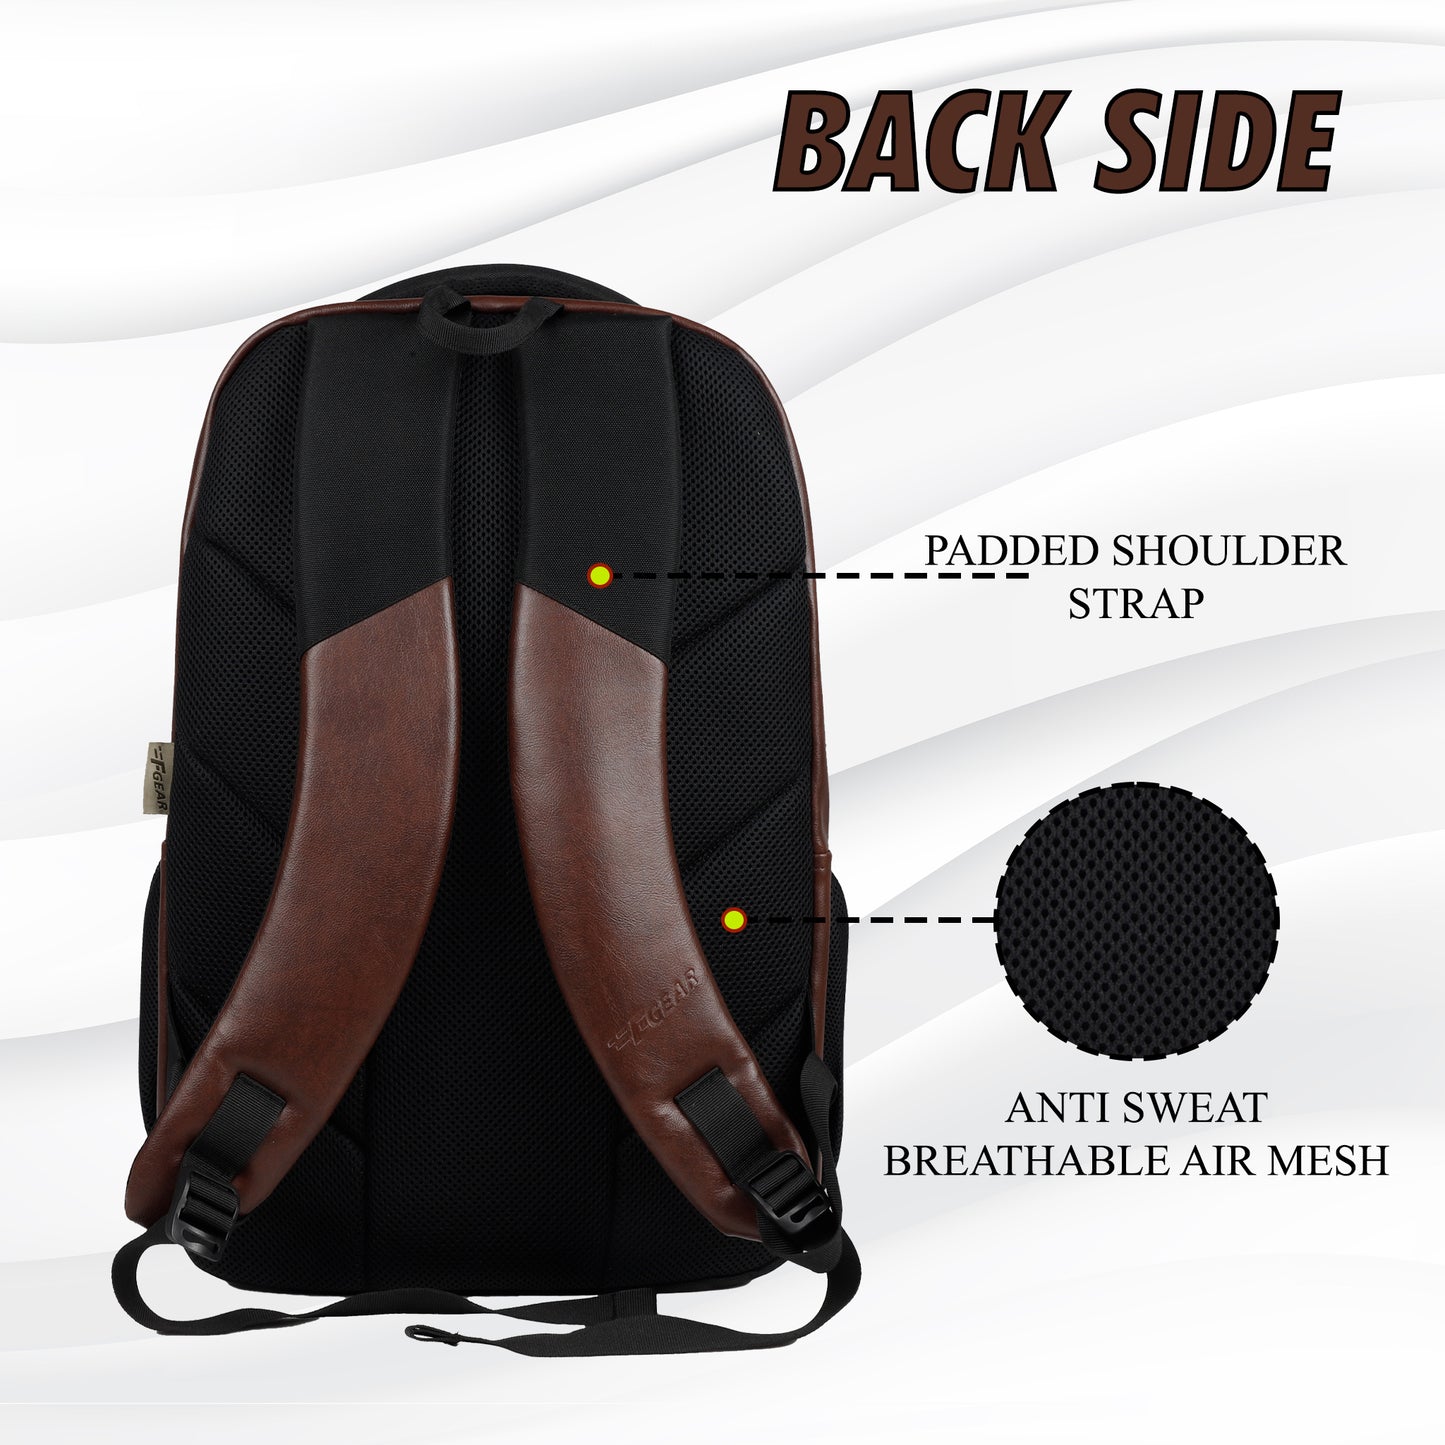 Bering 28L Tan Art Leather Laptop Backpack